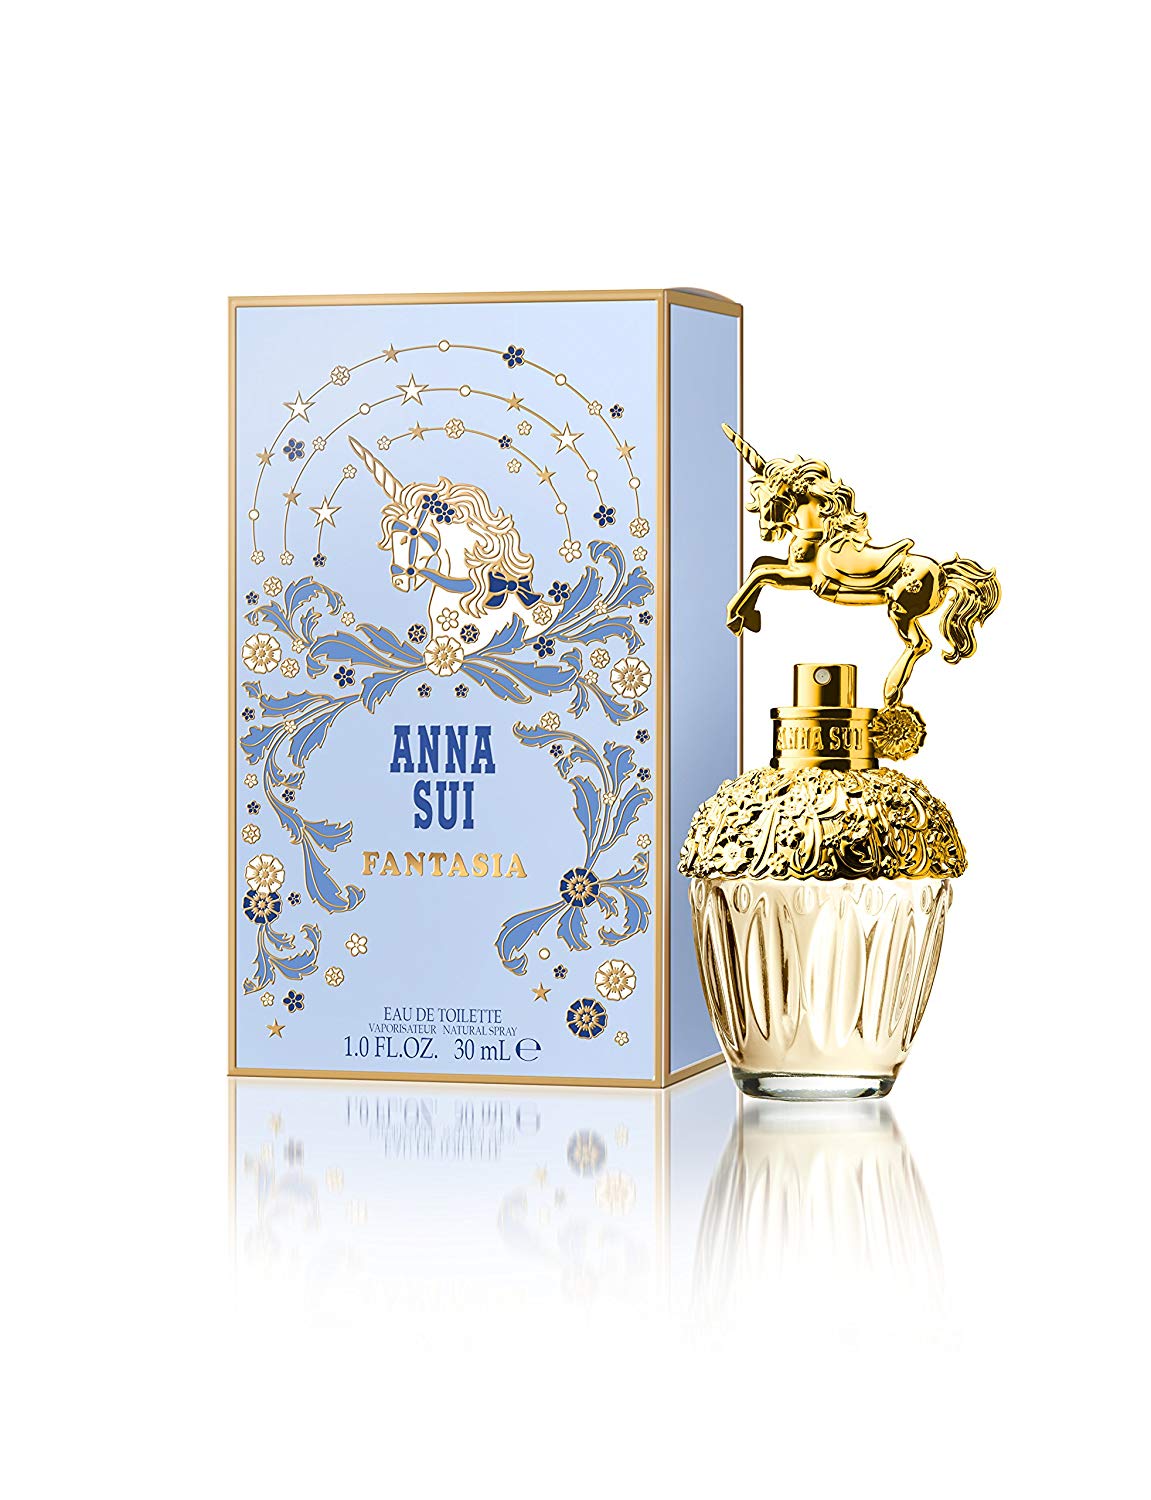 Anna Sui Fantasia Eau de Toilette 30ml Spray